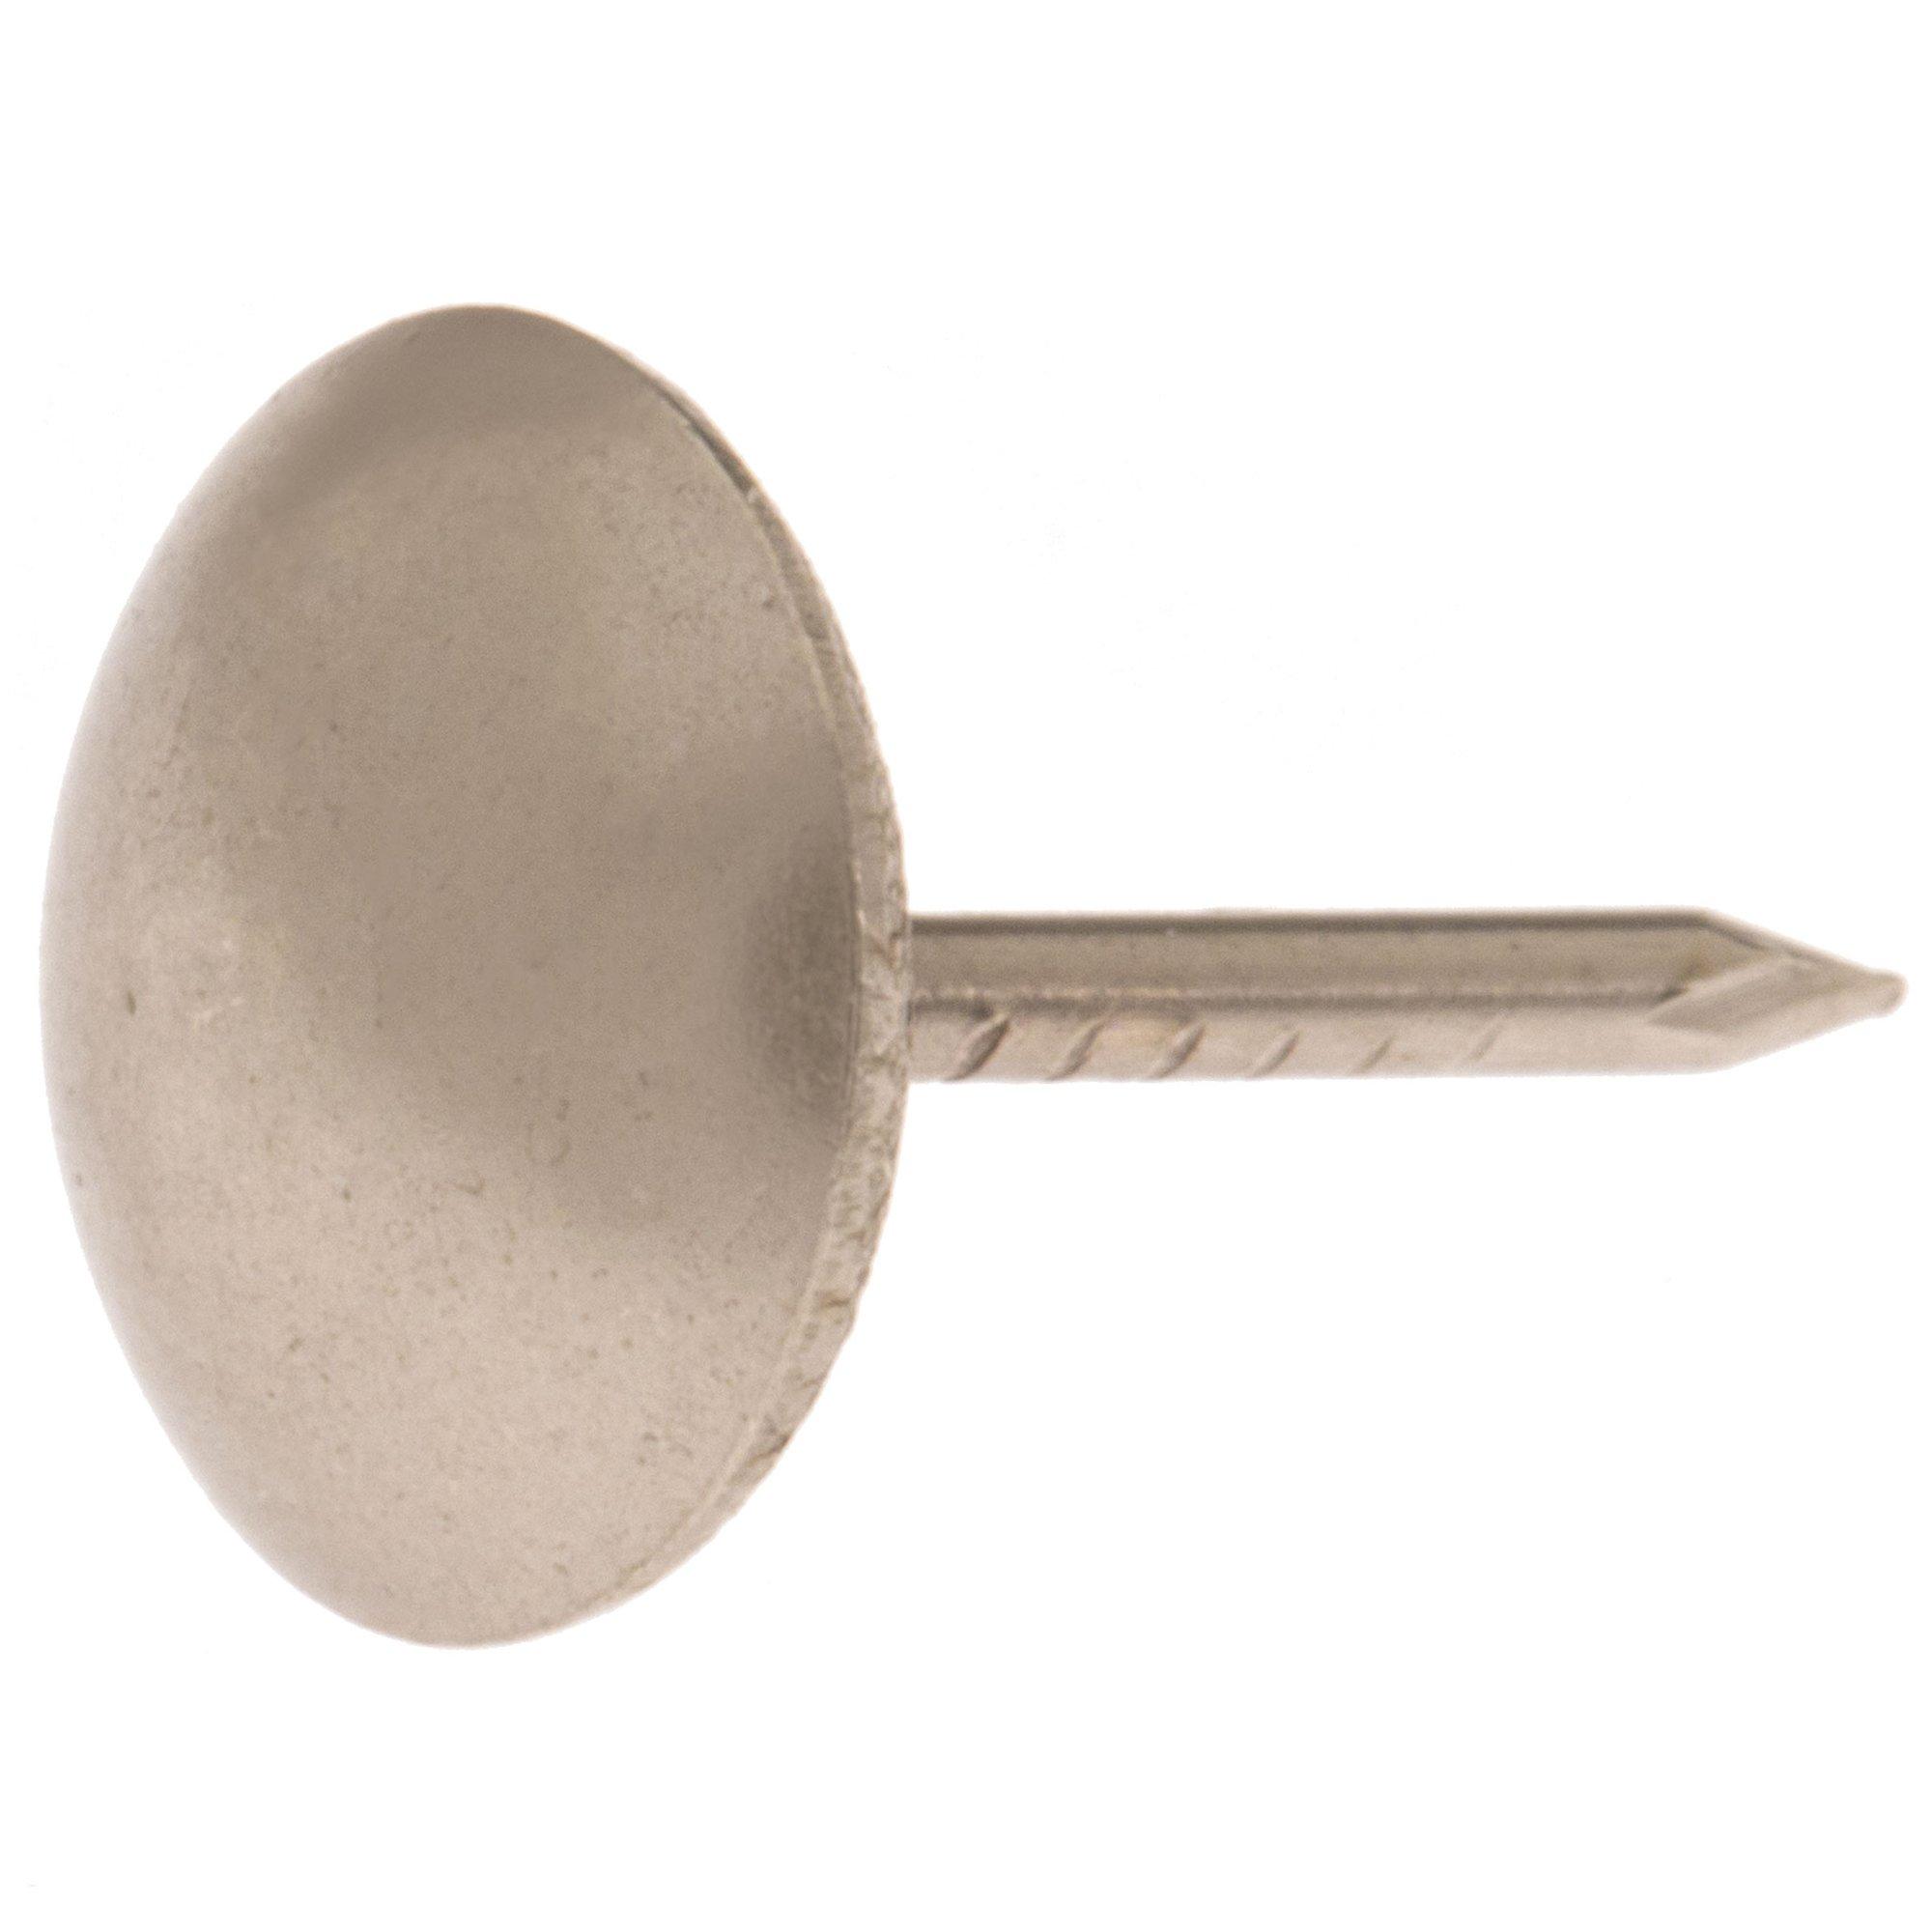 Brushed Nickel) 7/16 Decorative Upholstery Tacks, Round Head (1000)